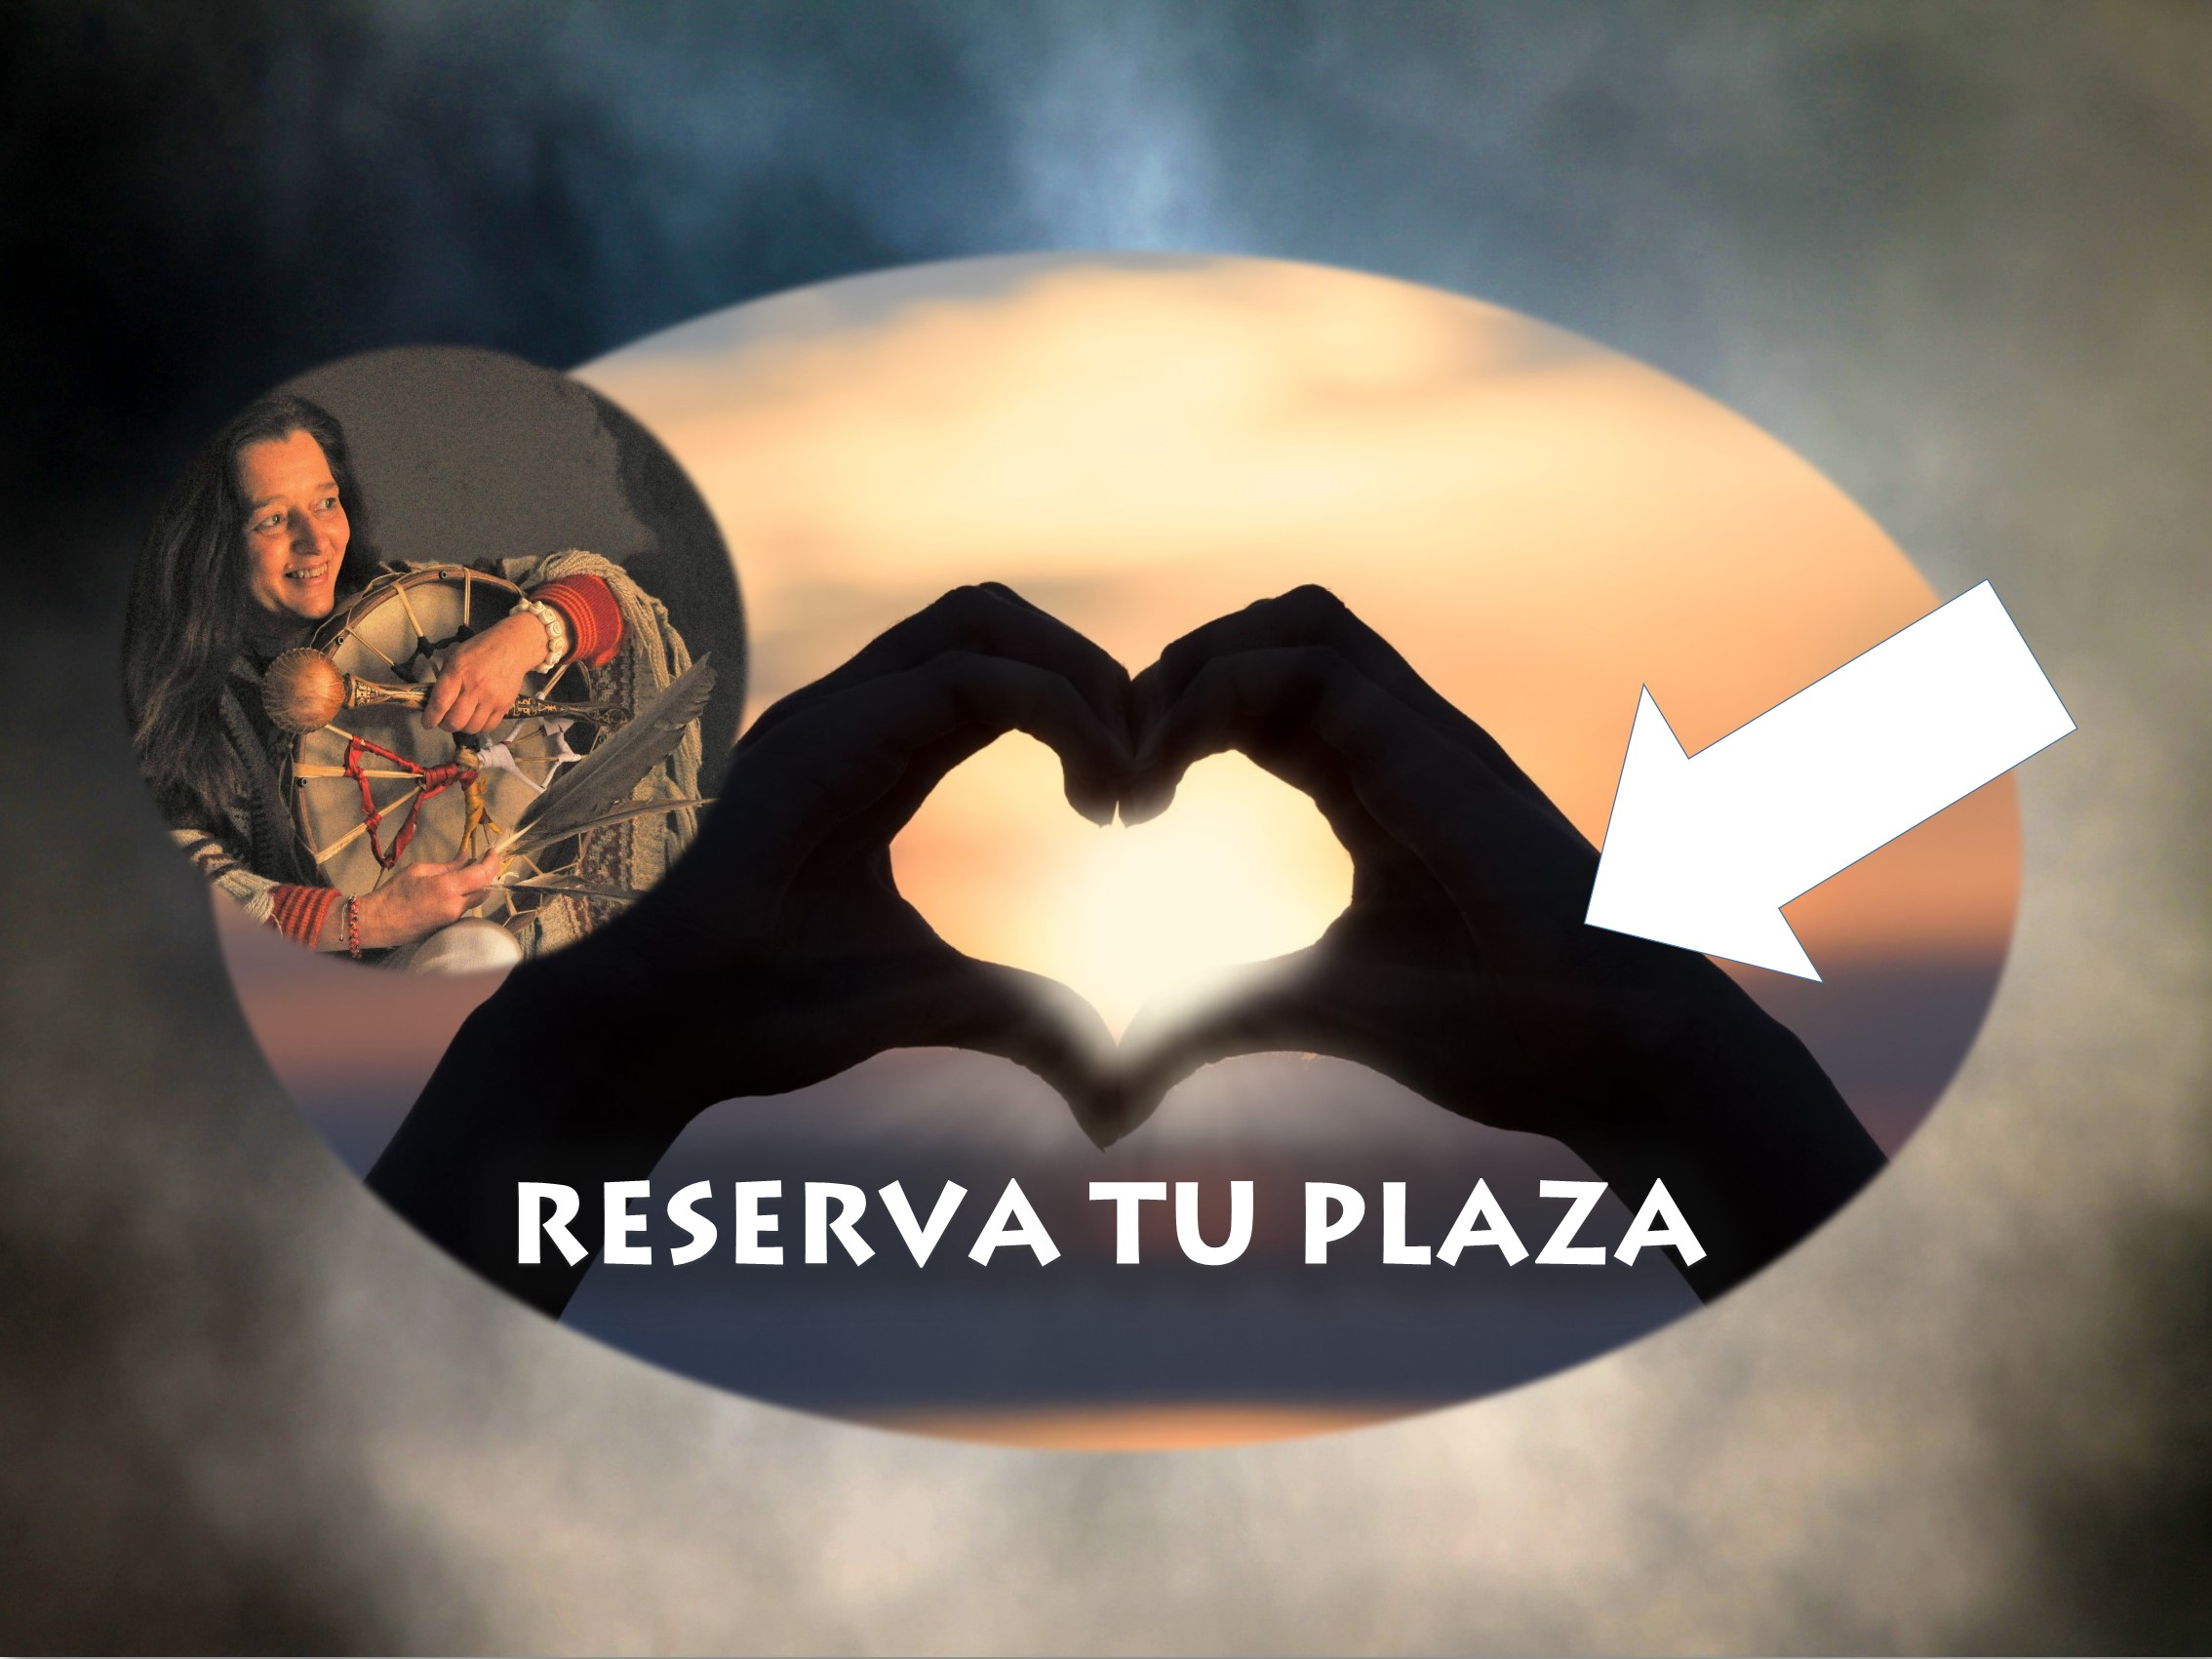 Reserva tu plaza